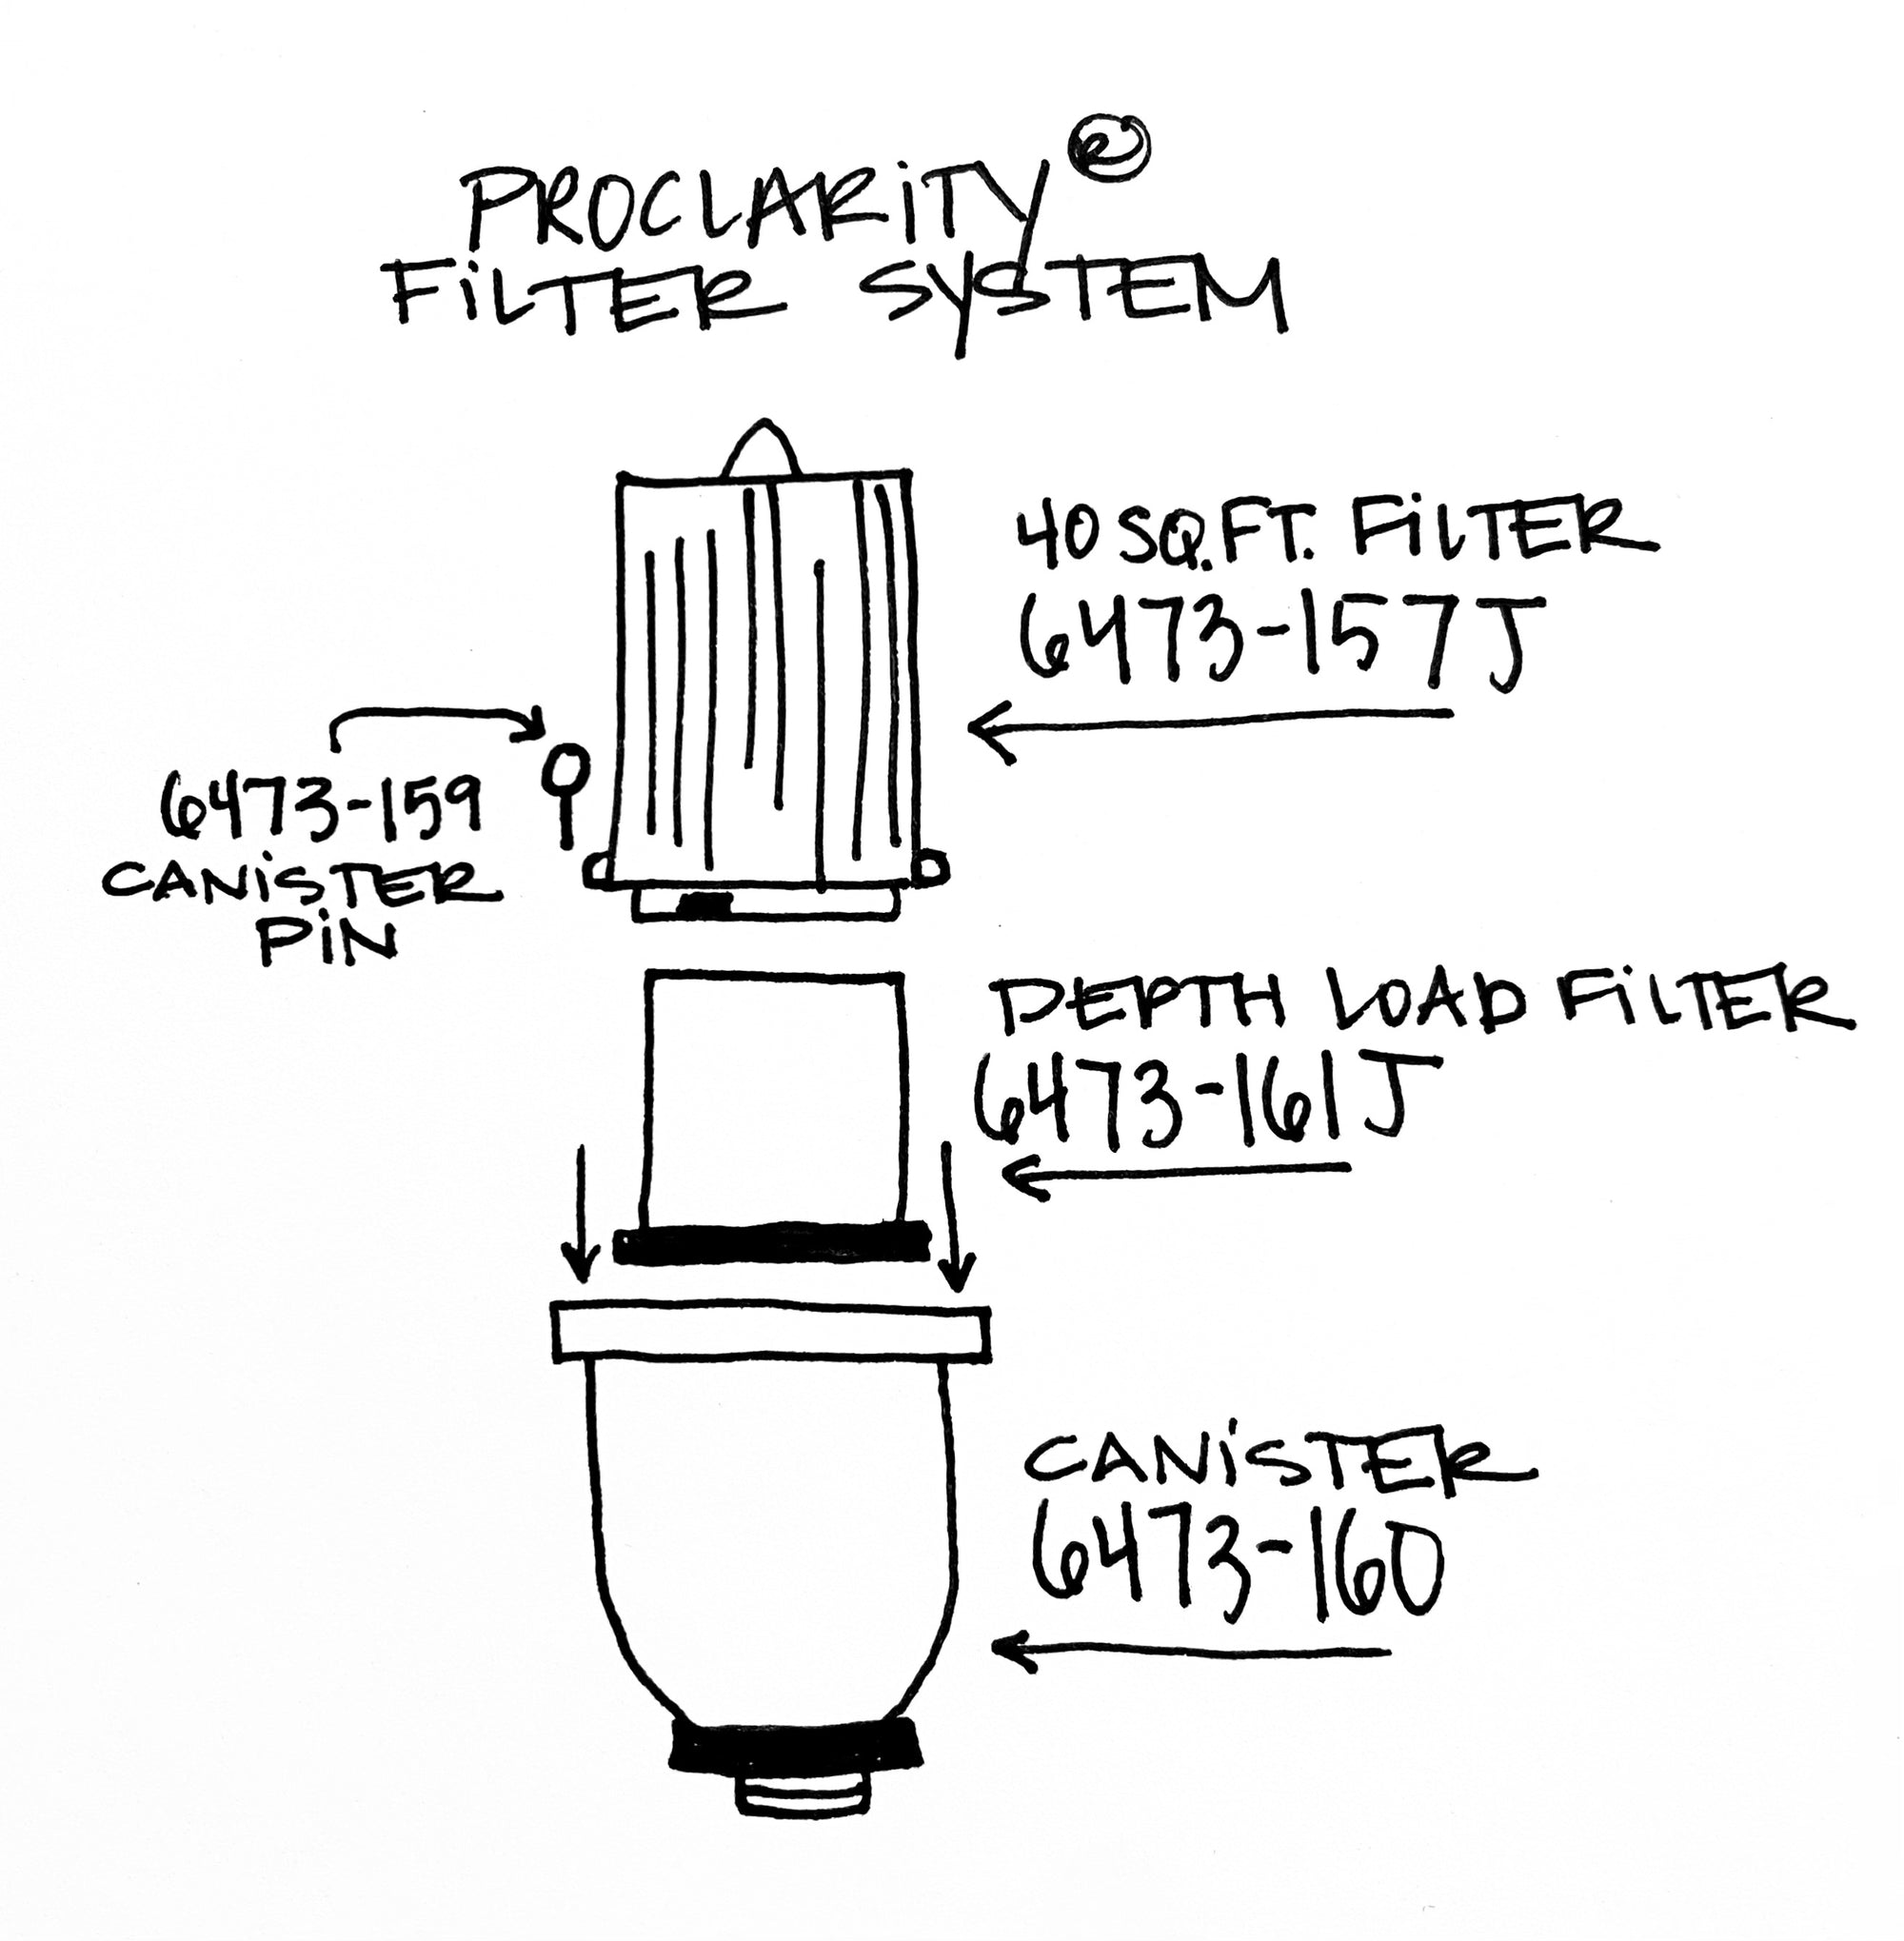 J400 filter, ProClarity, hot tub filter, 40 square foot filter, Jacuzzi filter, 6473-157J